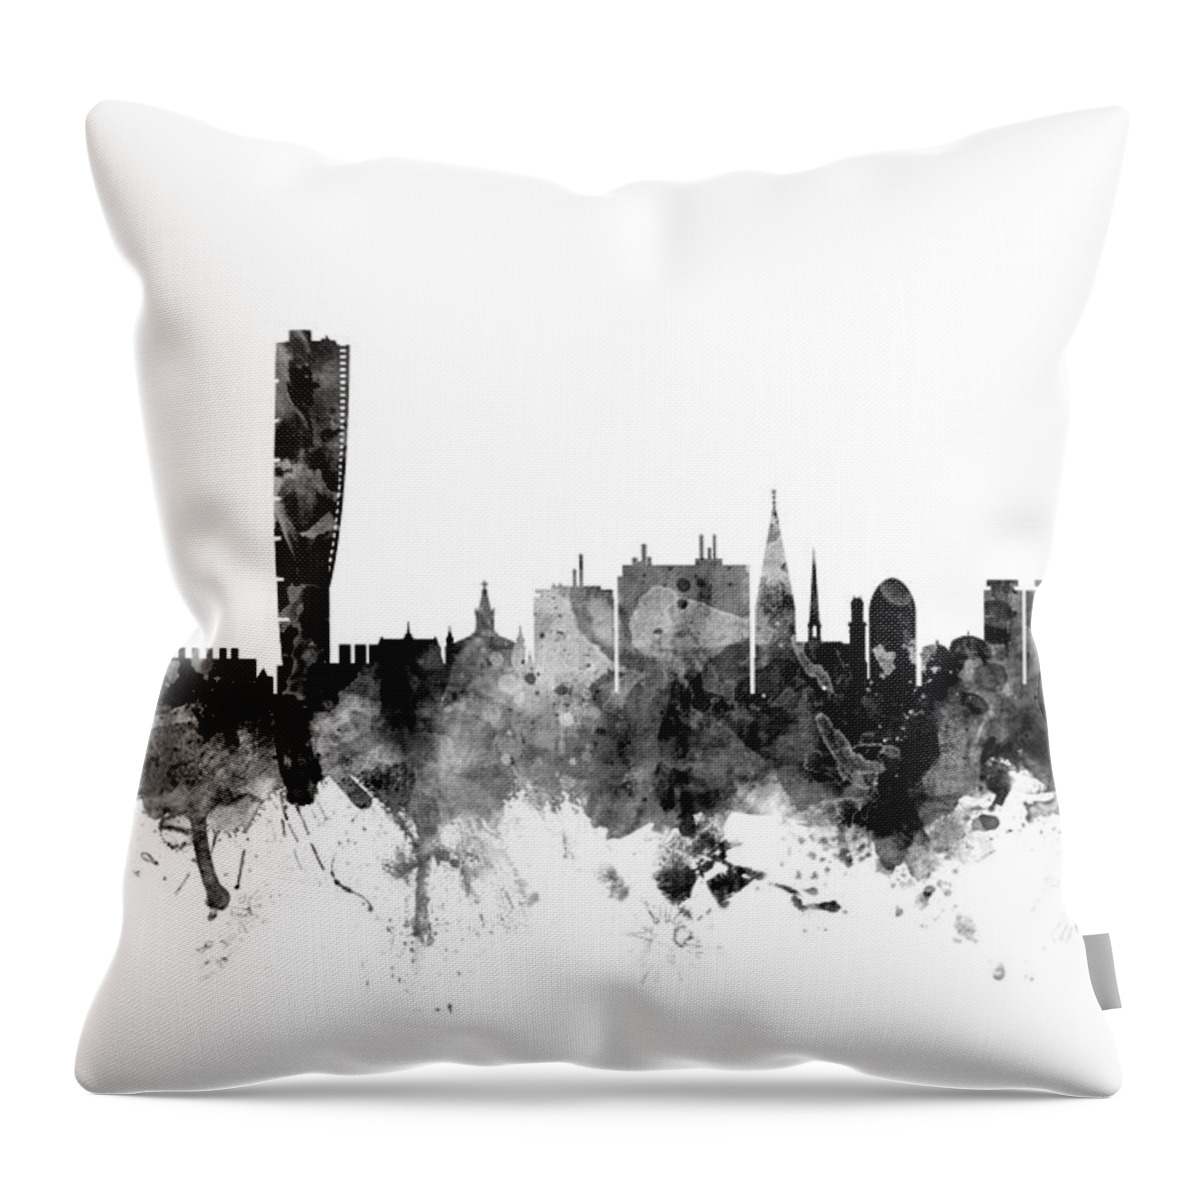 Sweden Throw Pillow featuring the digital art Malmo Sweden Skyline #2 by Michael Tompsett